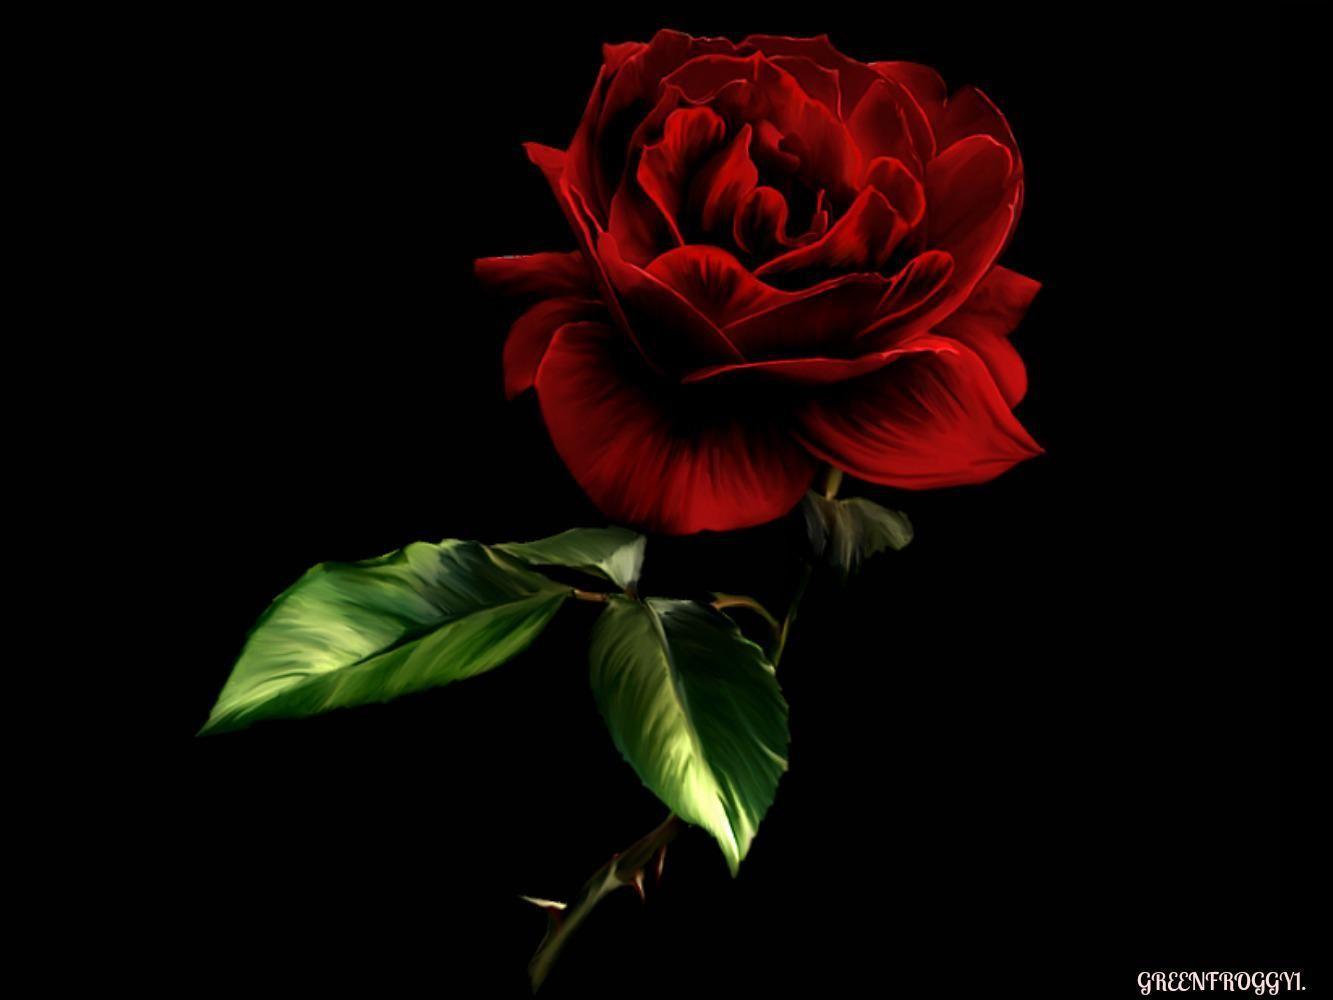 Artistic Rose Flower Red Rose Wallpaper. τ ε λ ε ι ο